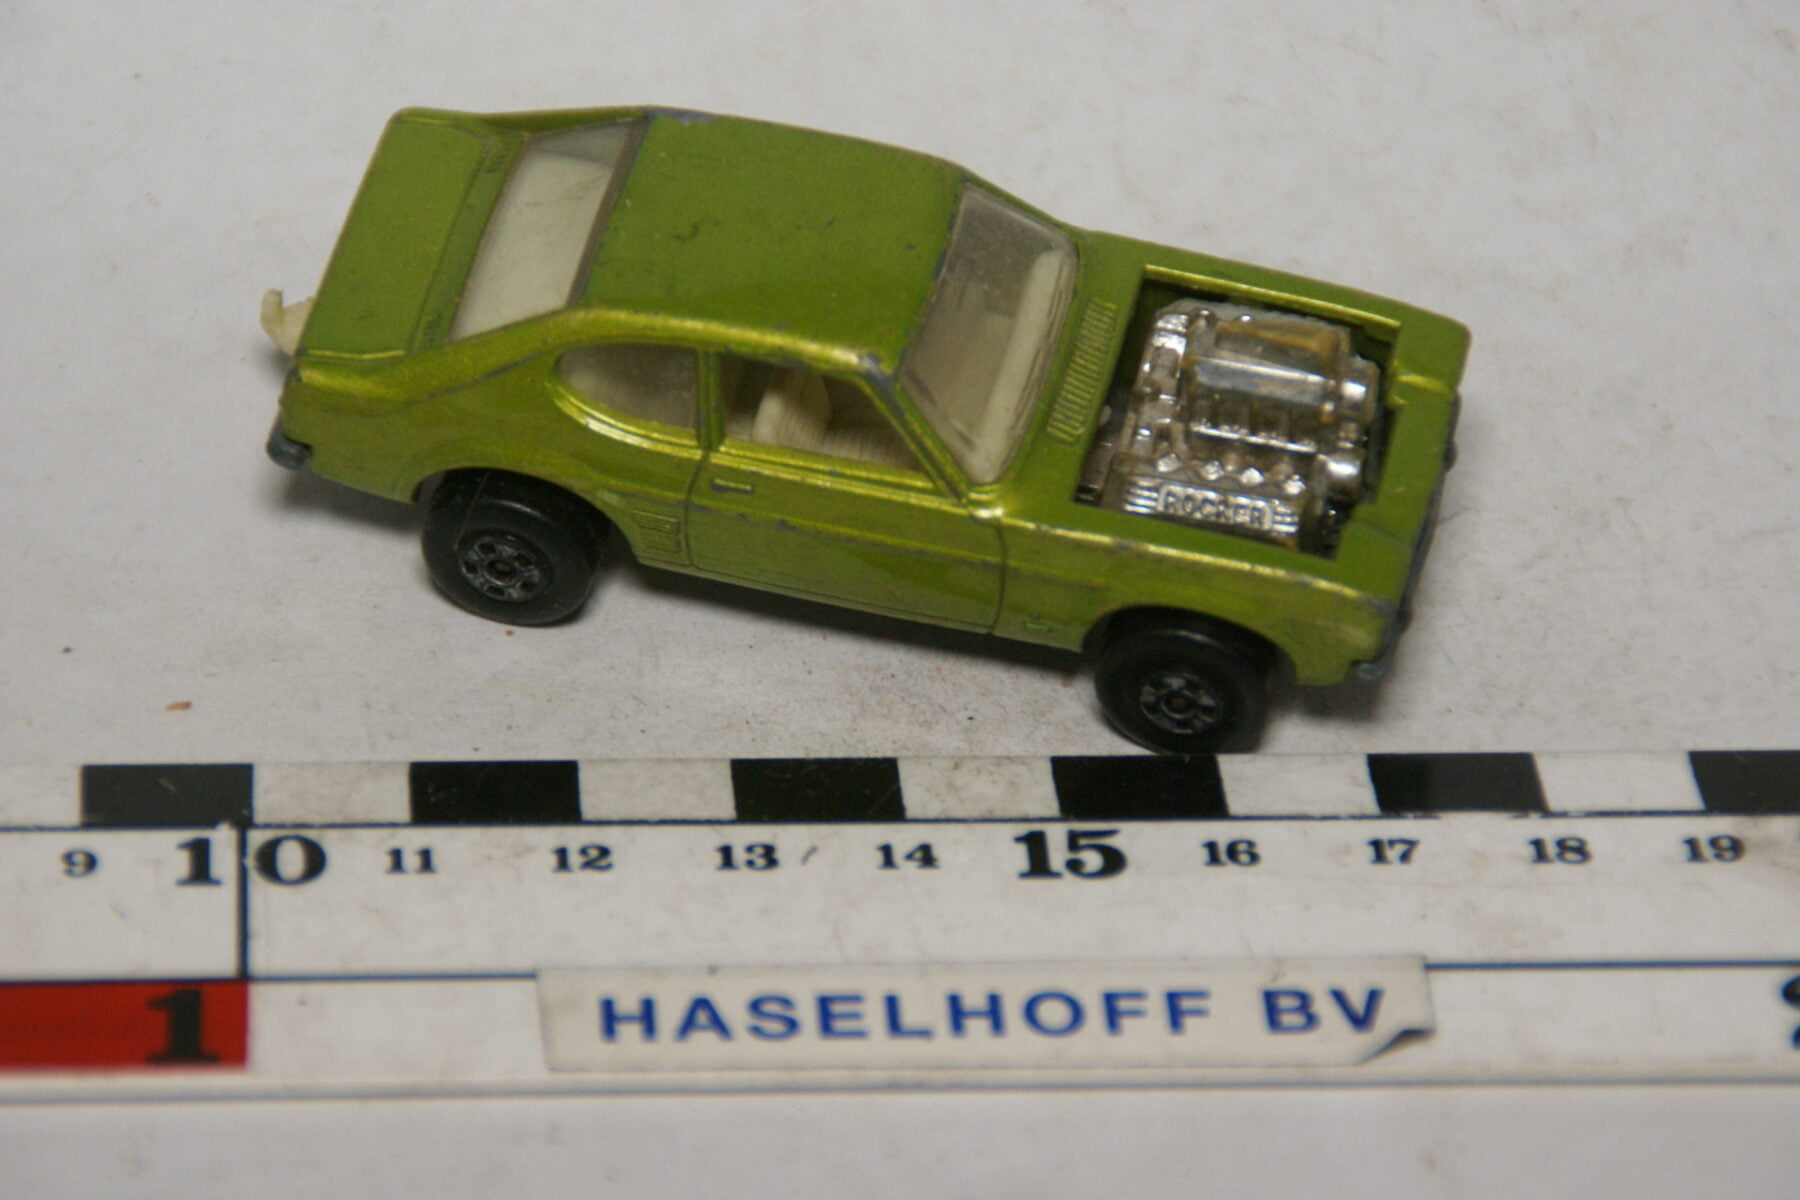 DSC07878 miniatuur 1975 Ford Capri groen ca 1op70 Matcbox nr 87